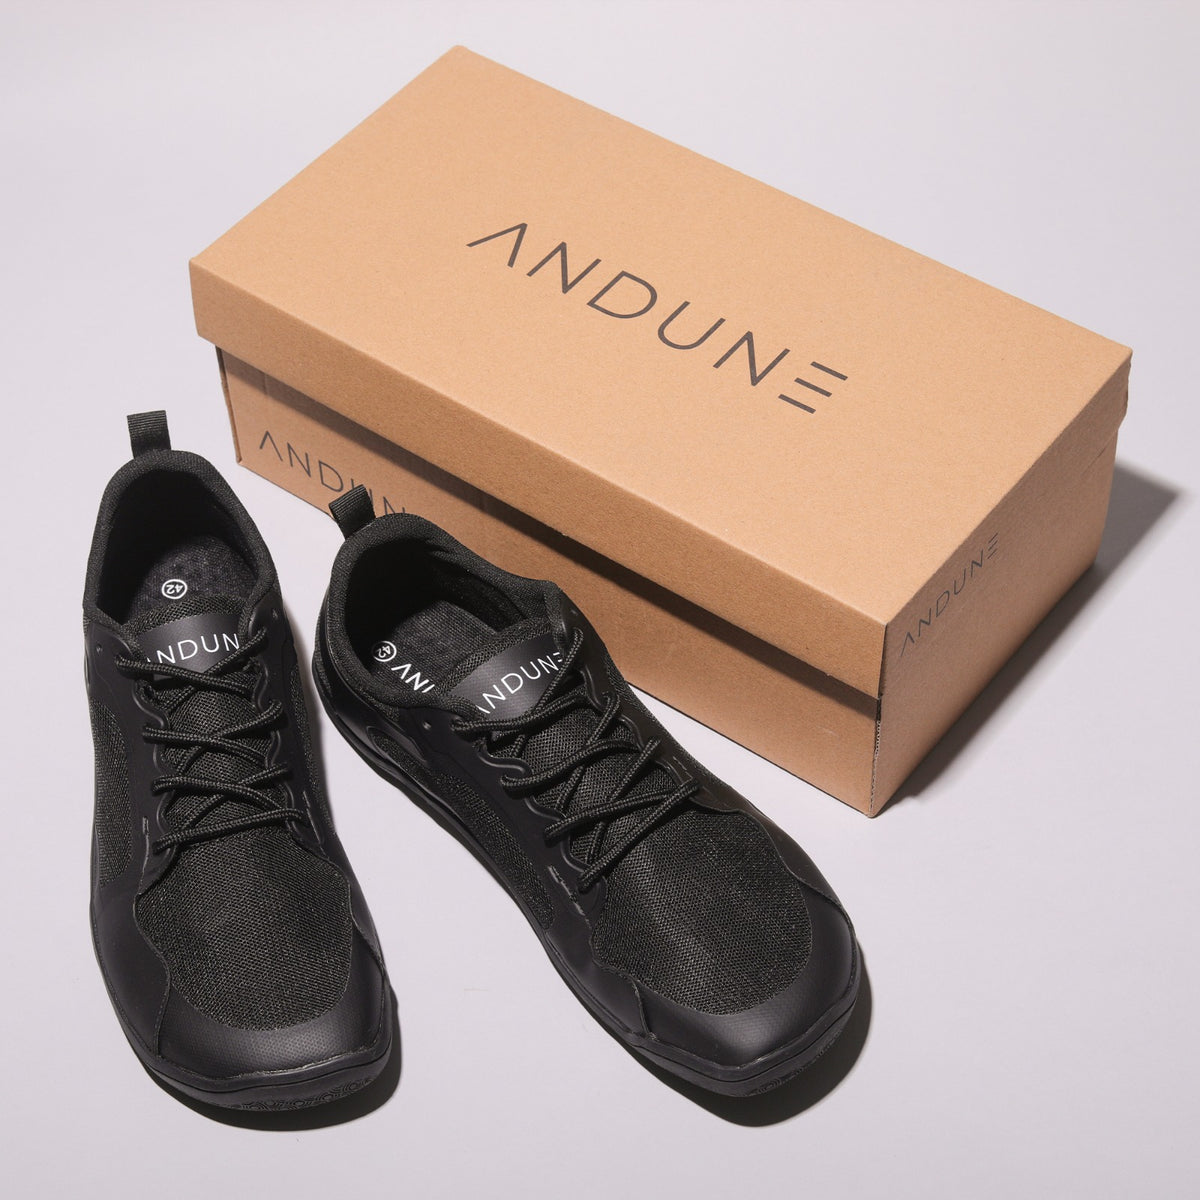 ANDUNE Men's Barefoot Sneakers - Urban Active Black Drift